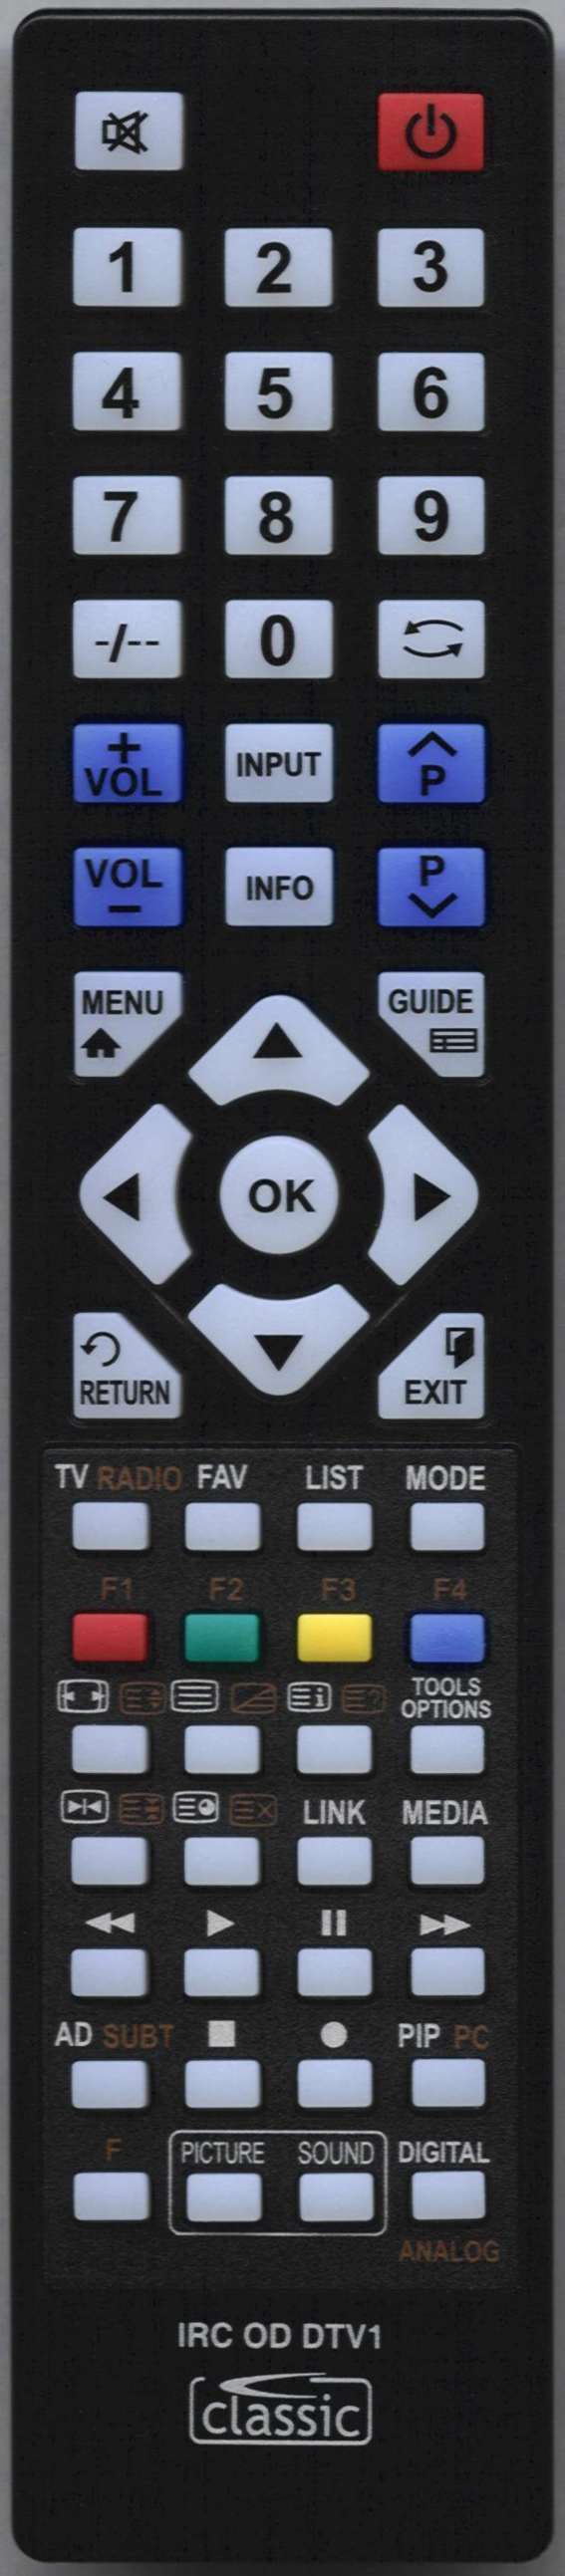 SONY RMT-TX102D Remote Control Alternative